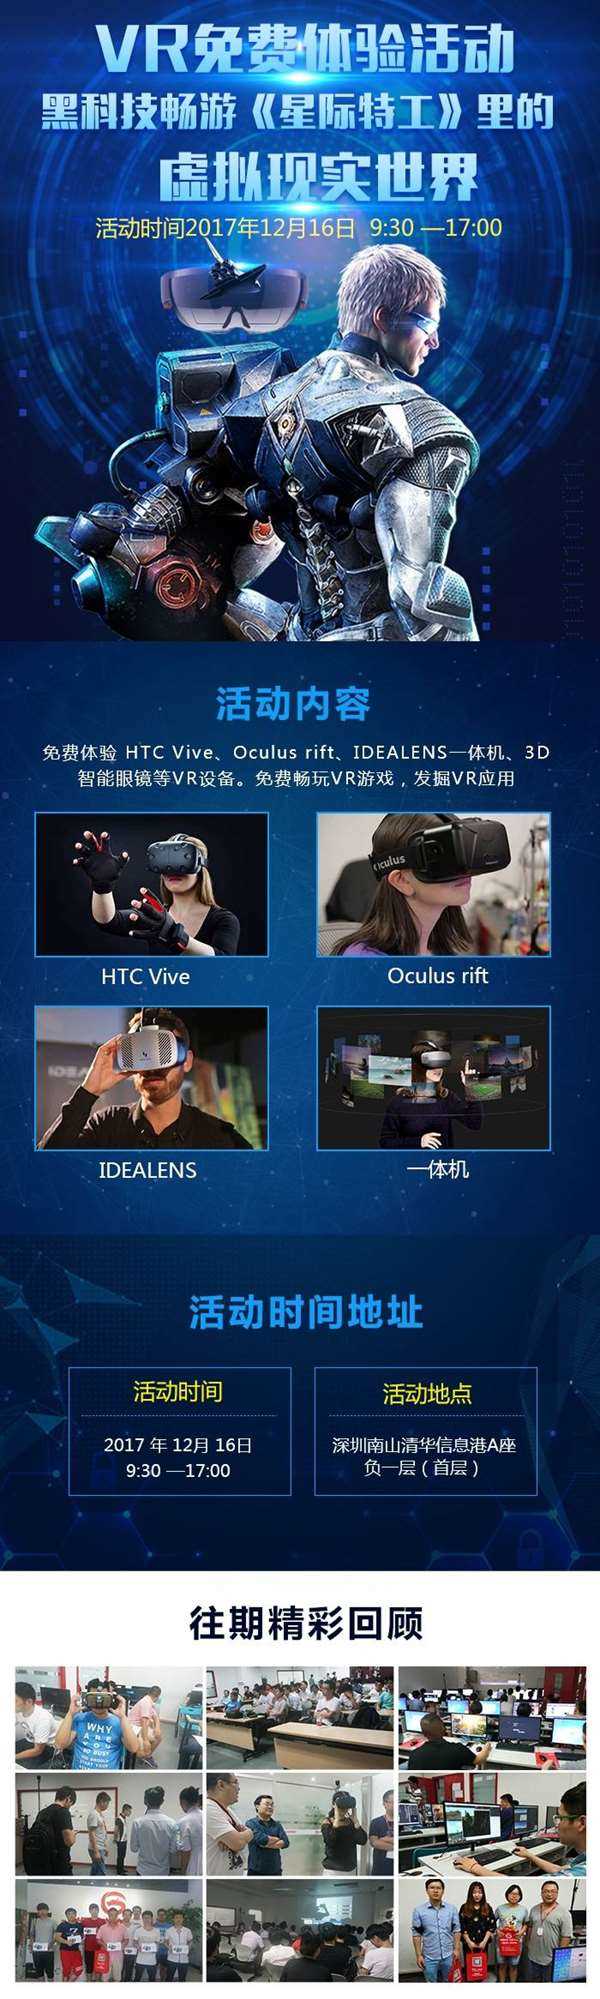 免费VR体验活动.jpg